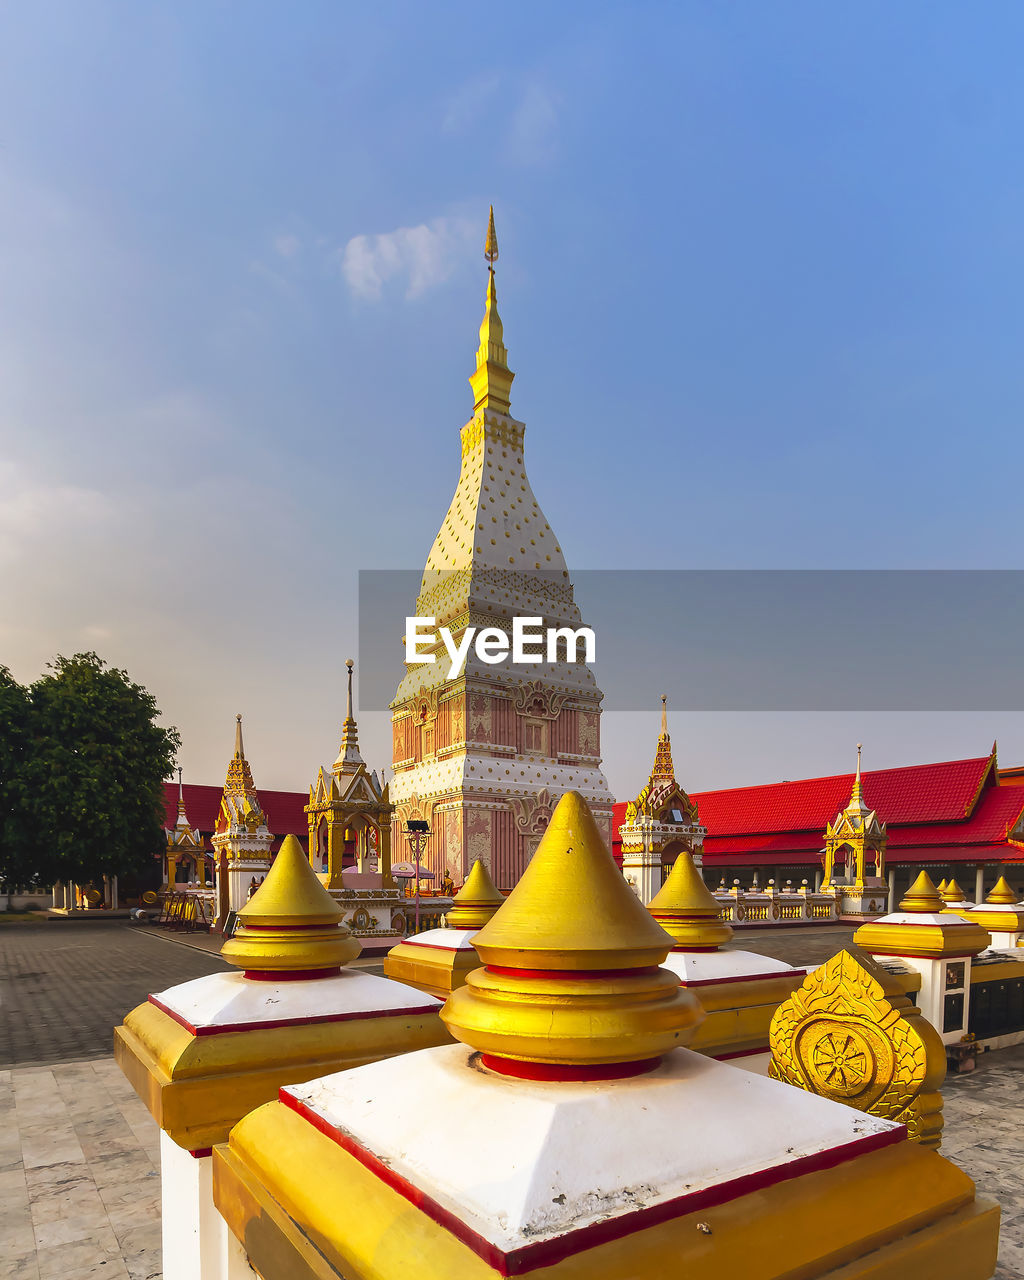 Pagoda of wat phra that renu in renu nakhon dridtrict, nakhon phanom,thailand